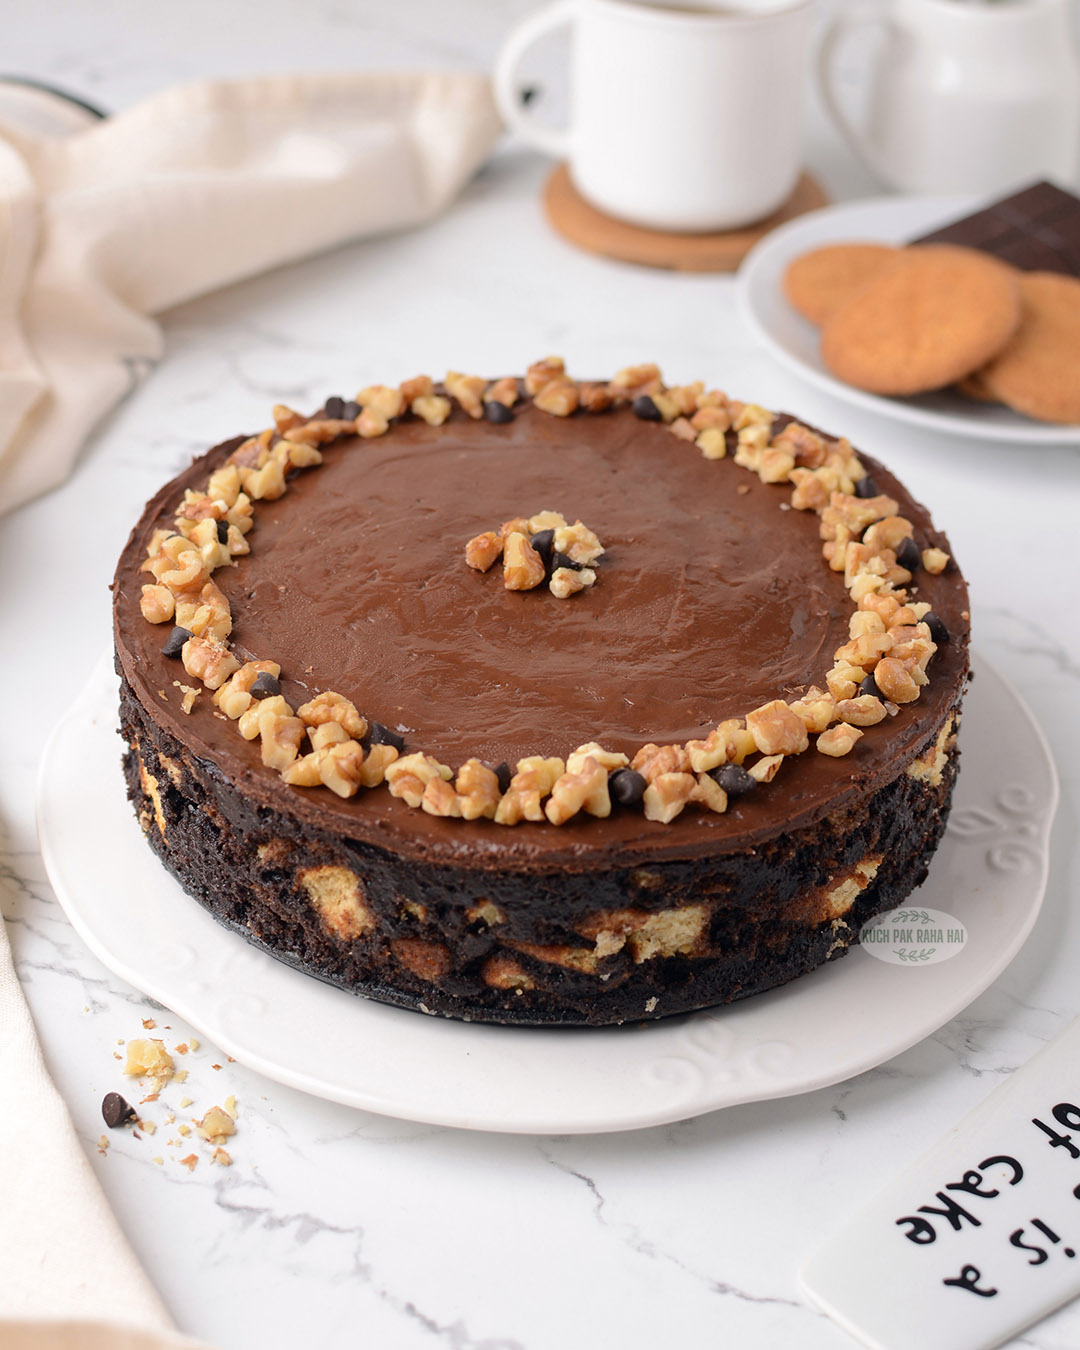 Queen Elizabeth chocolate biscuit cake recipe.